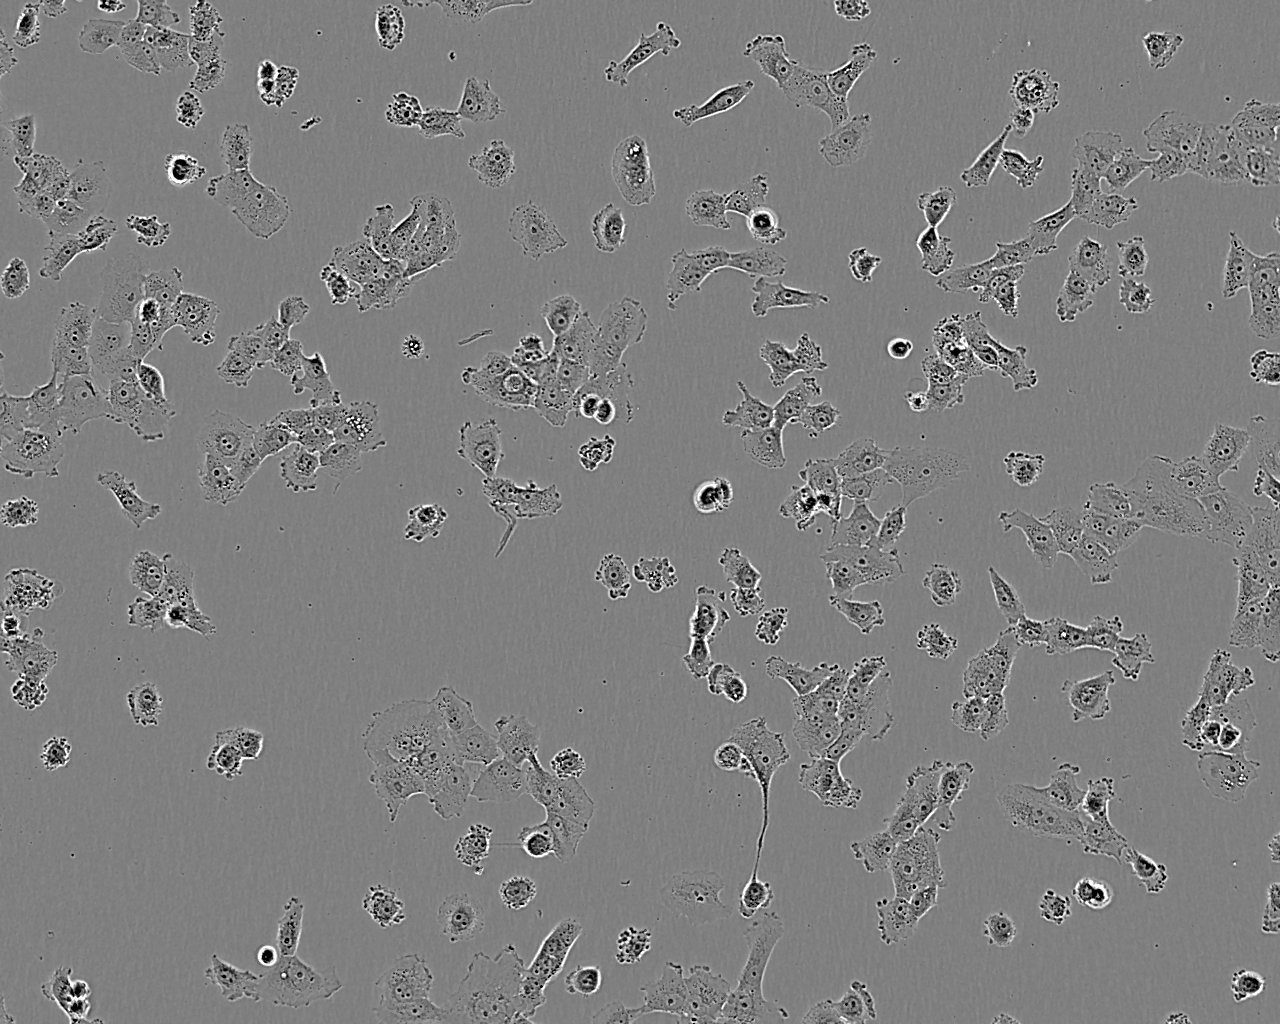 UACC-812 epithelioid cells人乳腺导管瘤细胞系,UACC-812 epithelioid cells